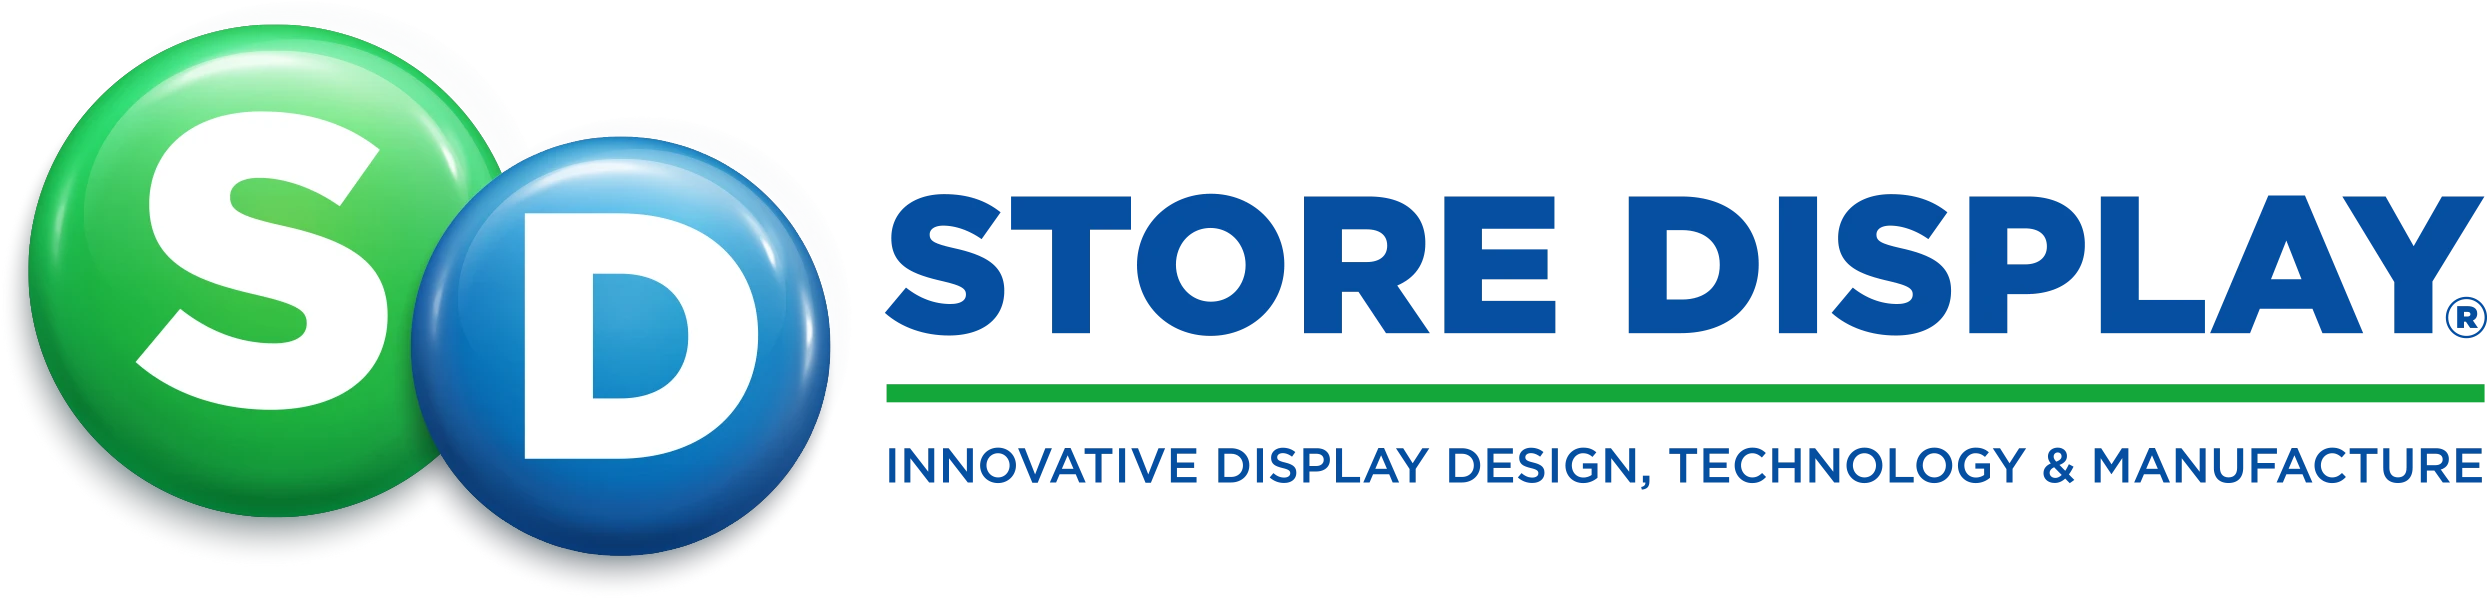 Store display logo, pos/pop manufacturer, retail marketing service provider